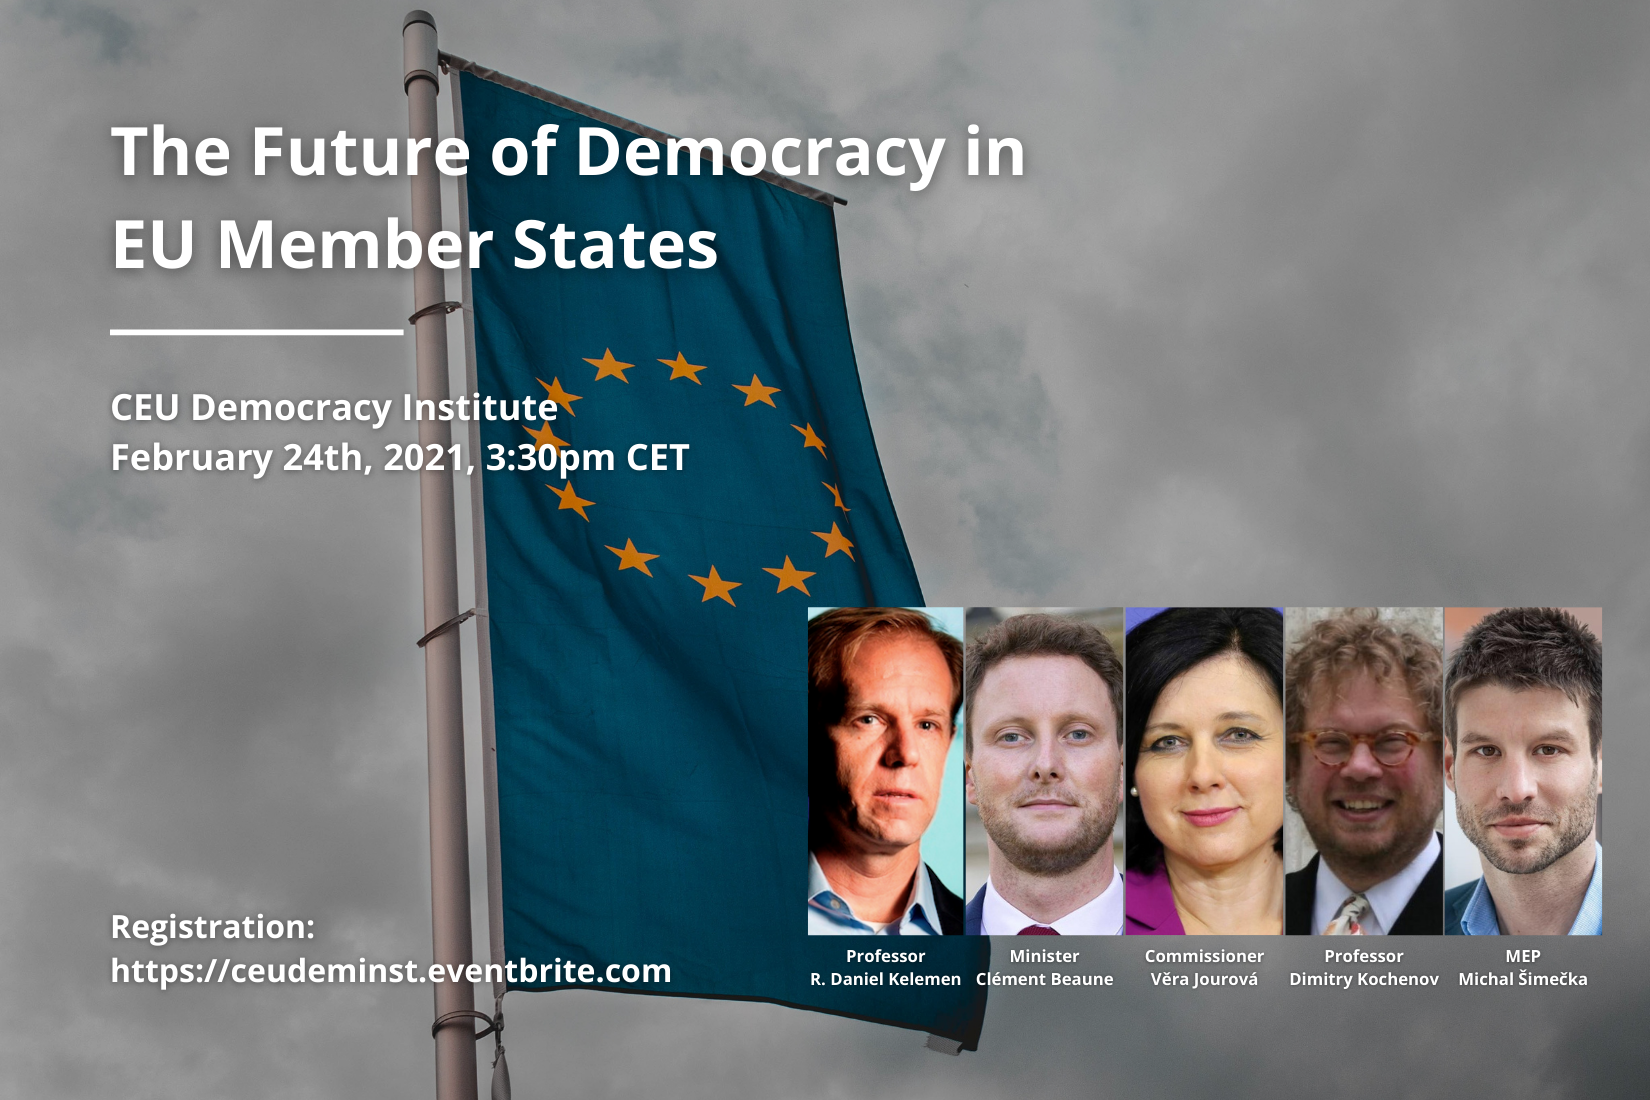 Visit https://www.eventbrite.com/e/the-future-of-democracy-in-eu-member-states-tickets-141416716205